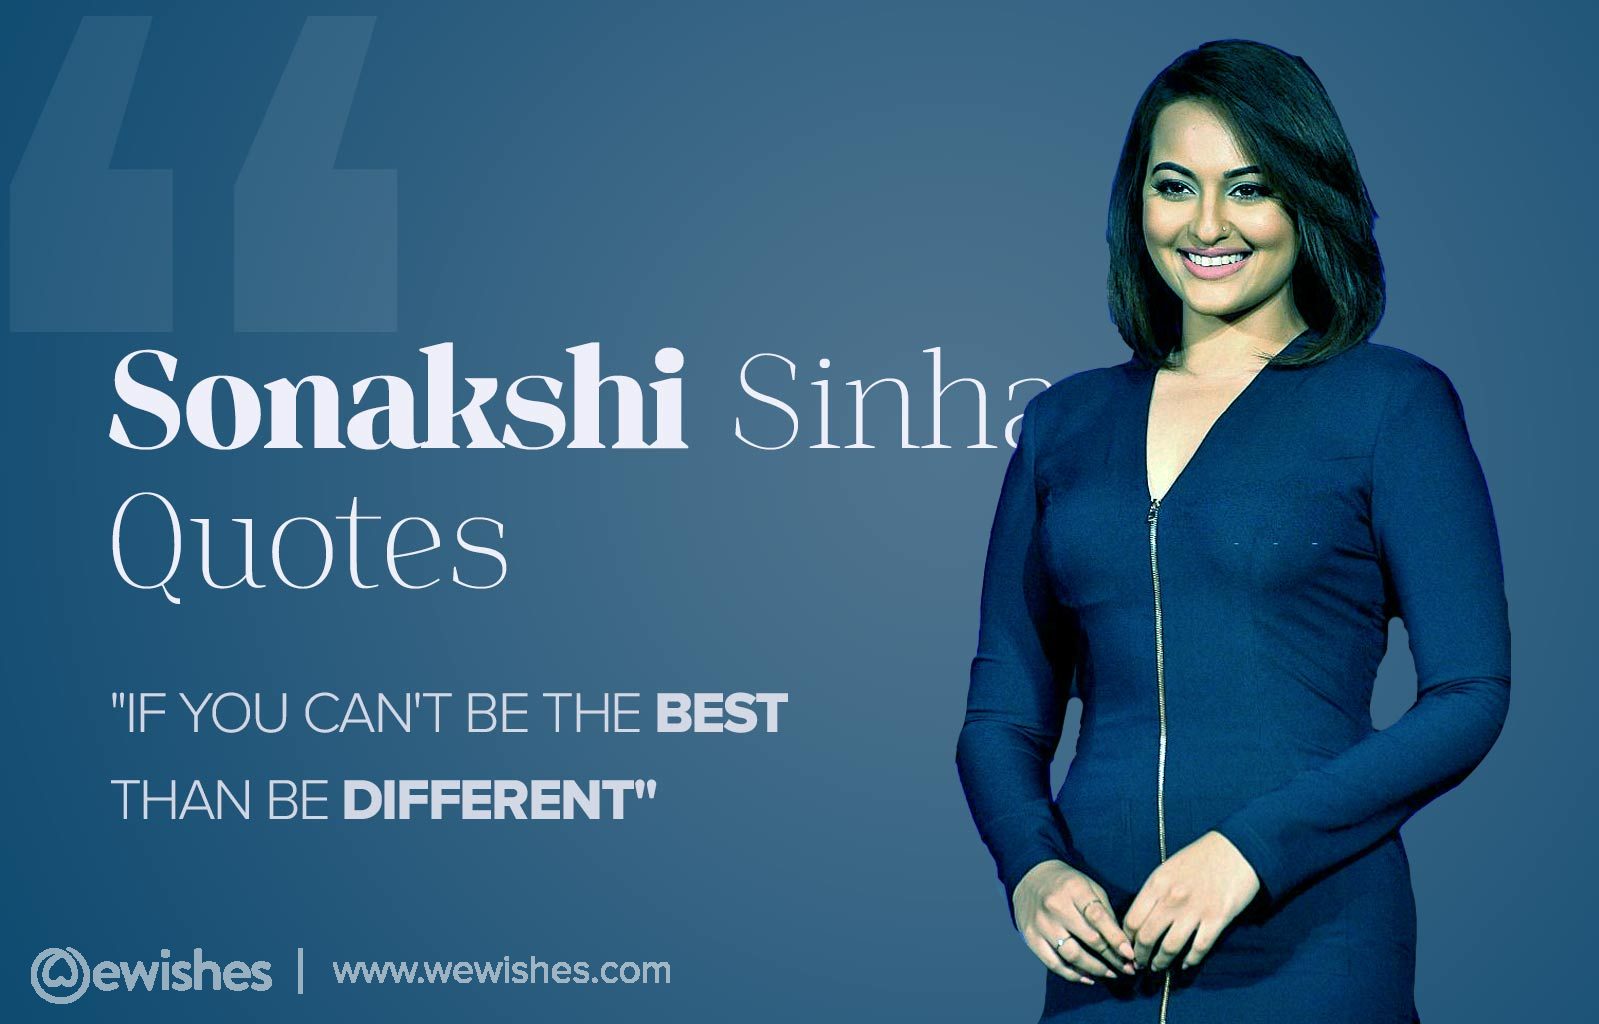 Sonakshi Sinha quotes